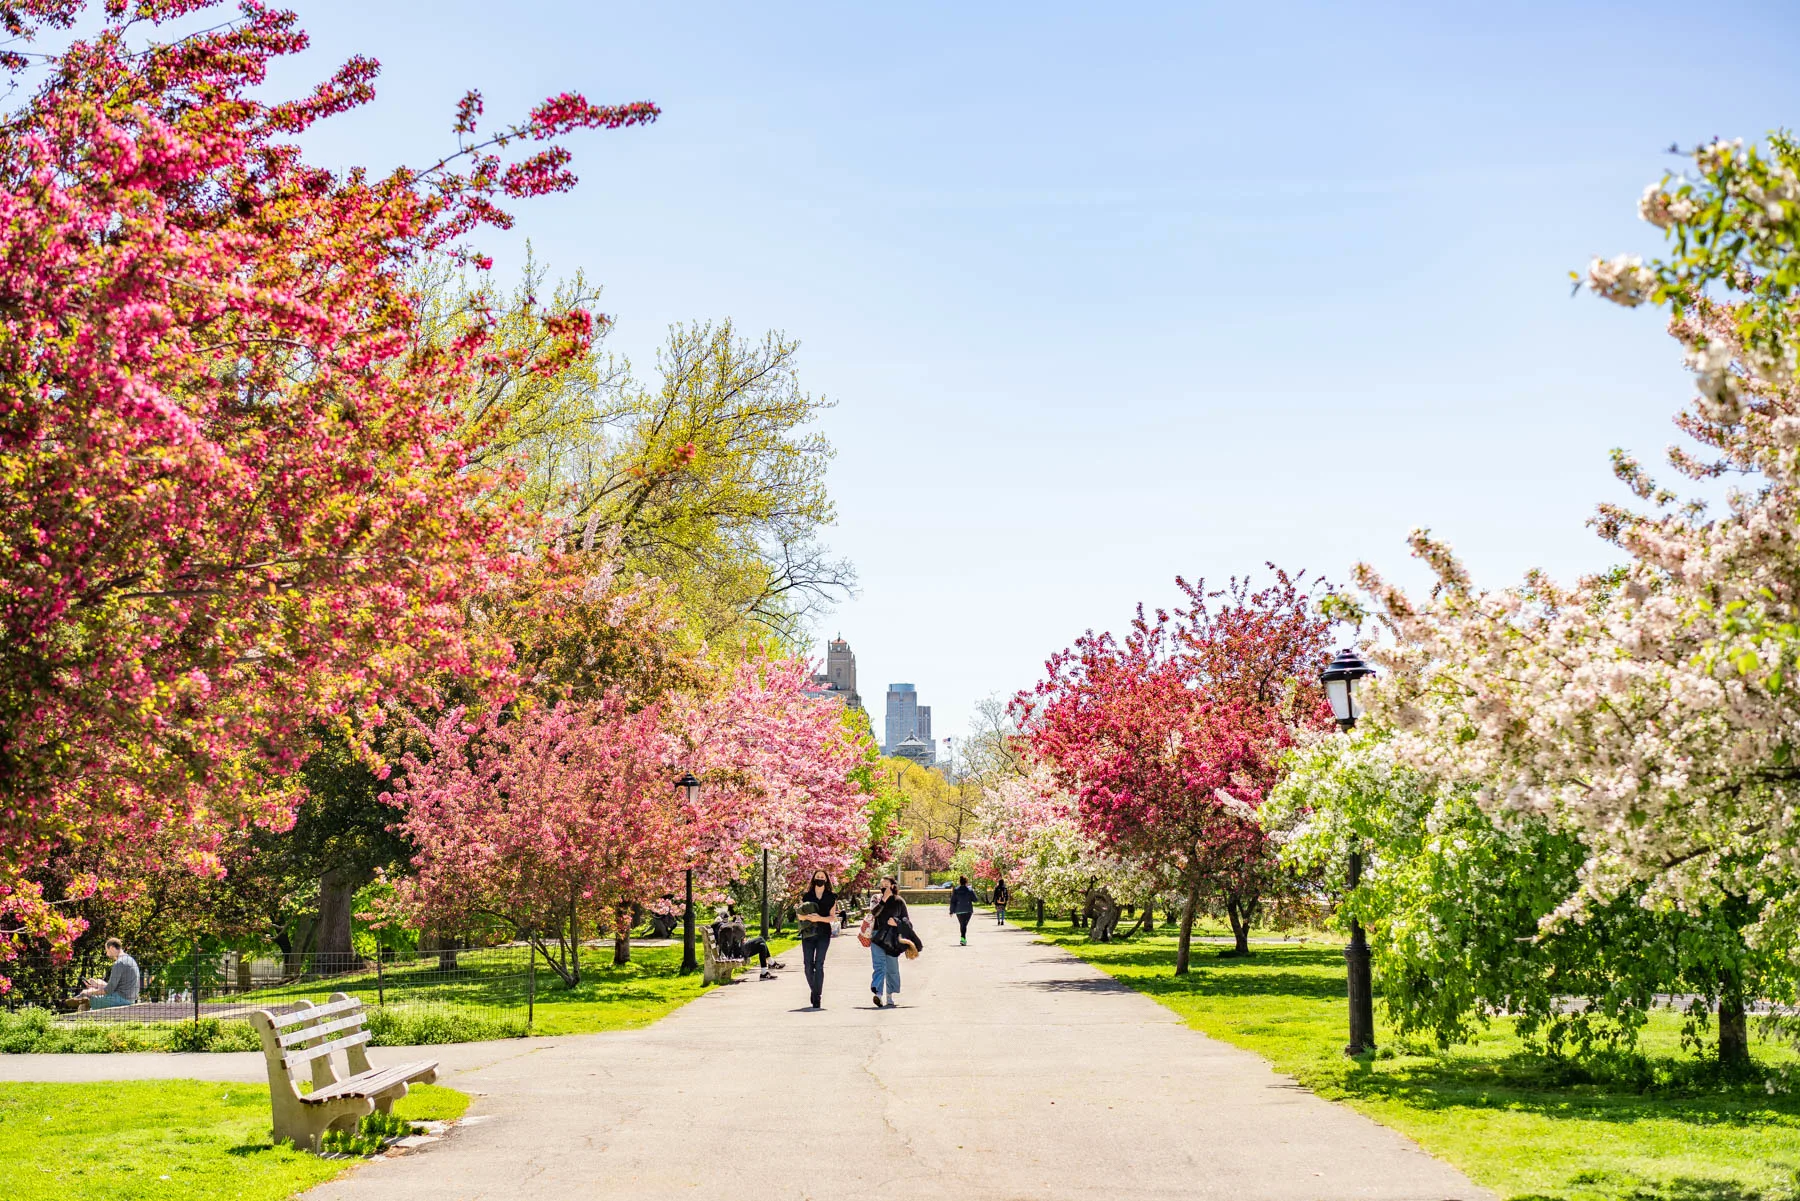 Best spots for cherry blossoms new York City
Riverside Park Cherry Walk